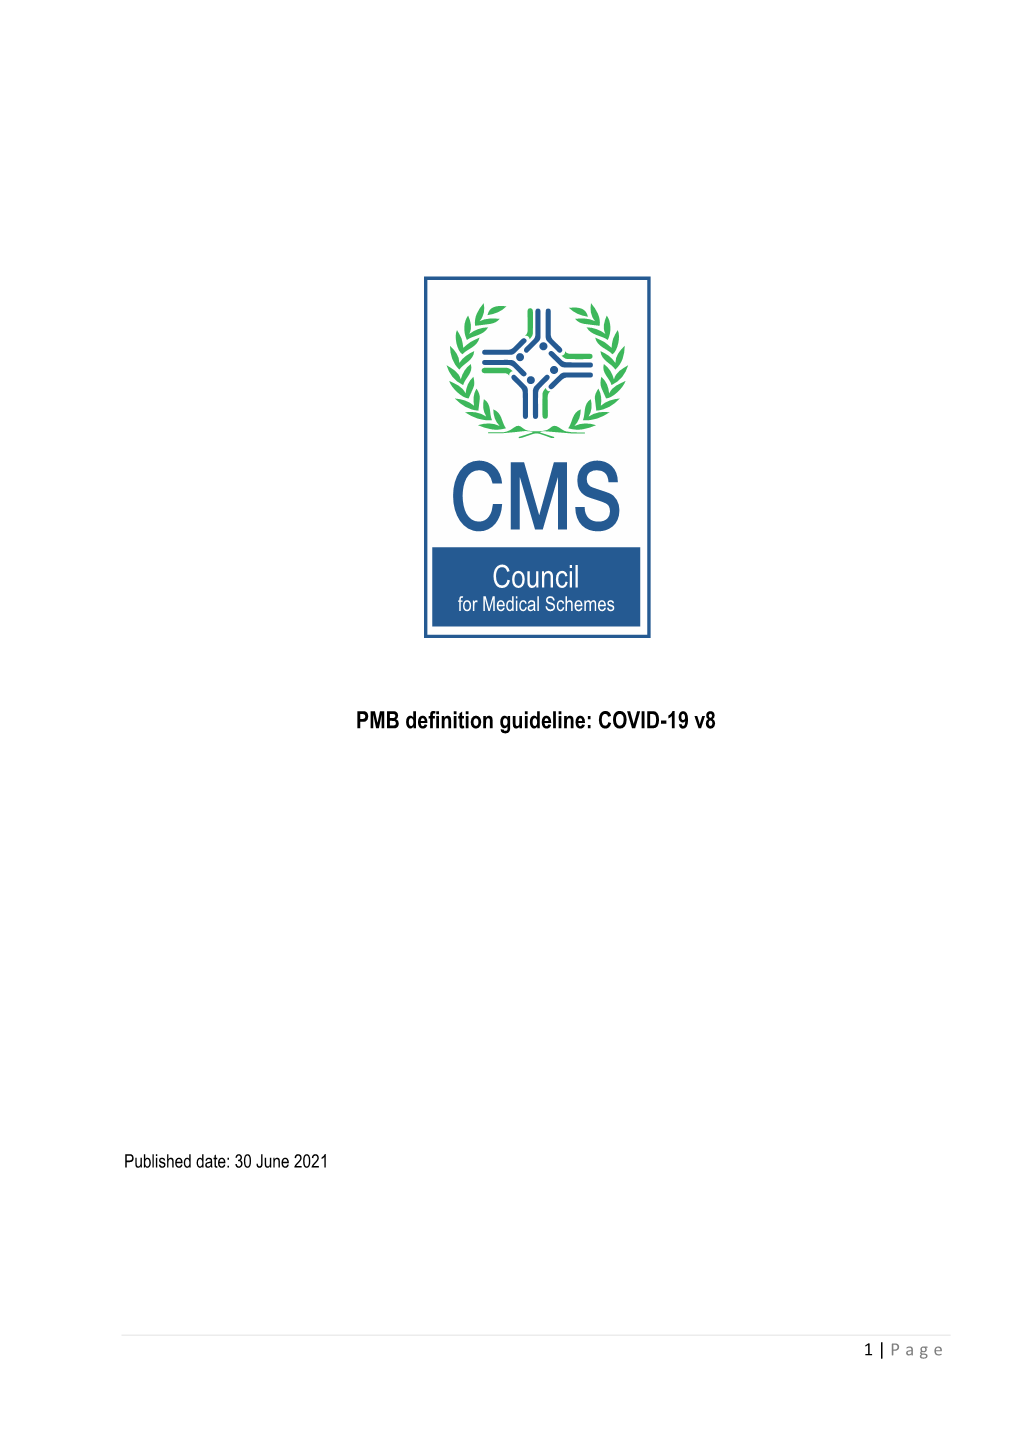 PMB Definition Guideline: COVID-19 V8